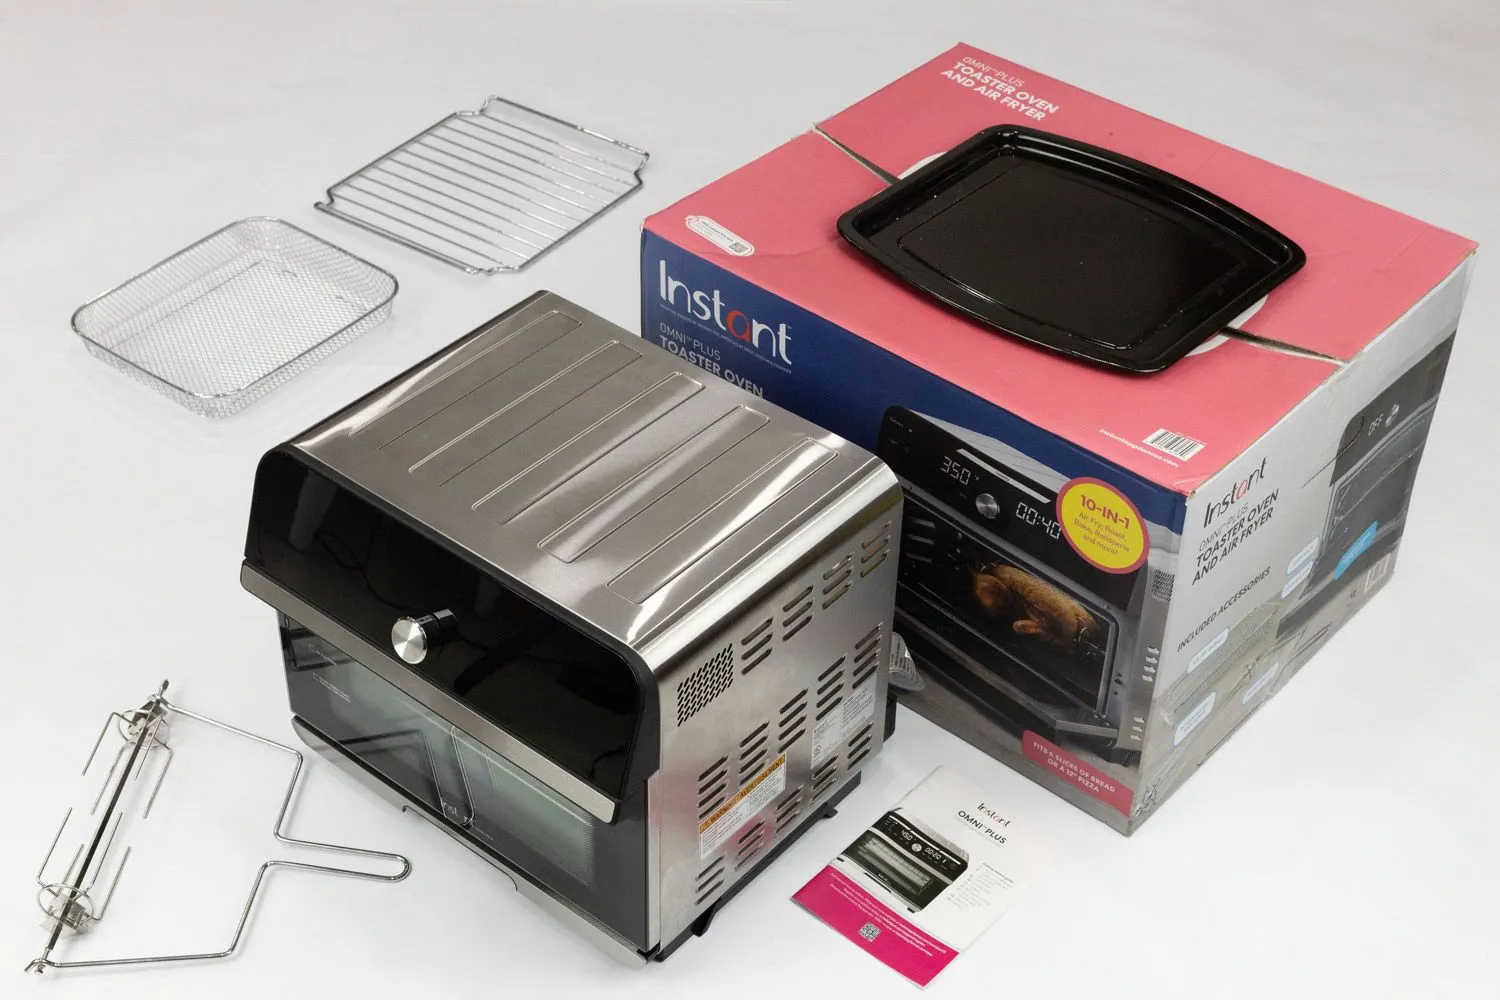 Omni Plus Toaster Oven Full Manual-1 - Instant Appliances